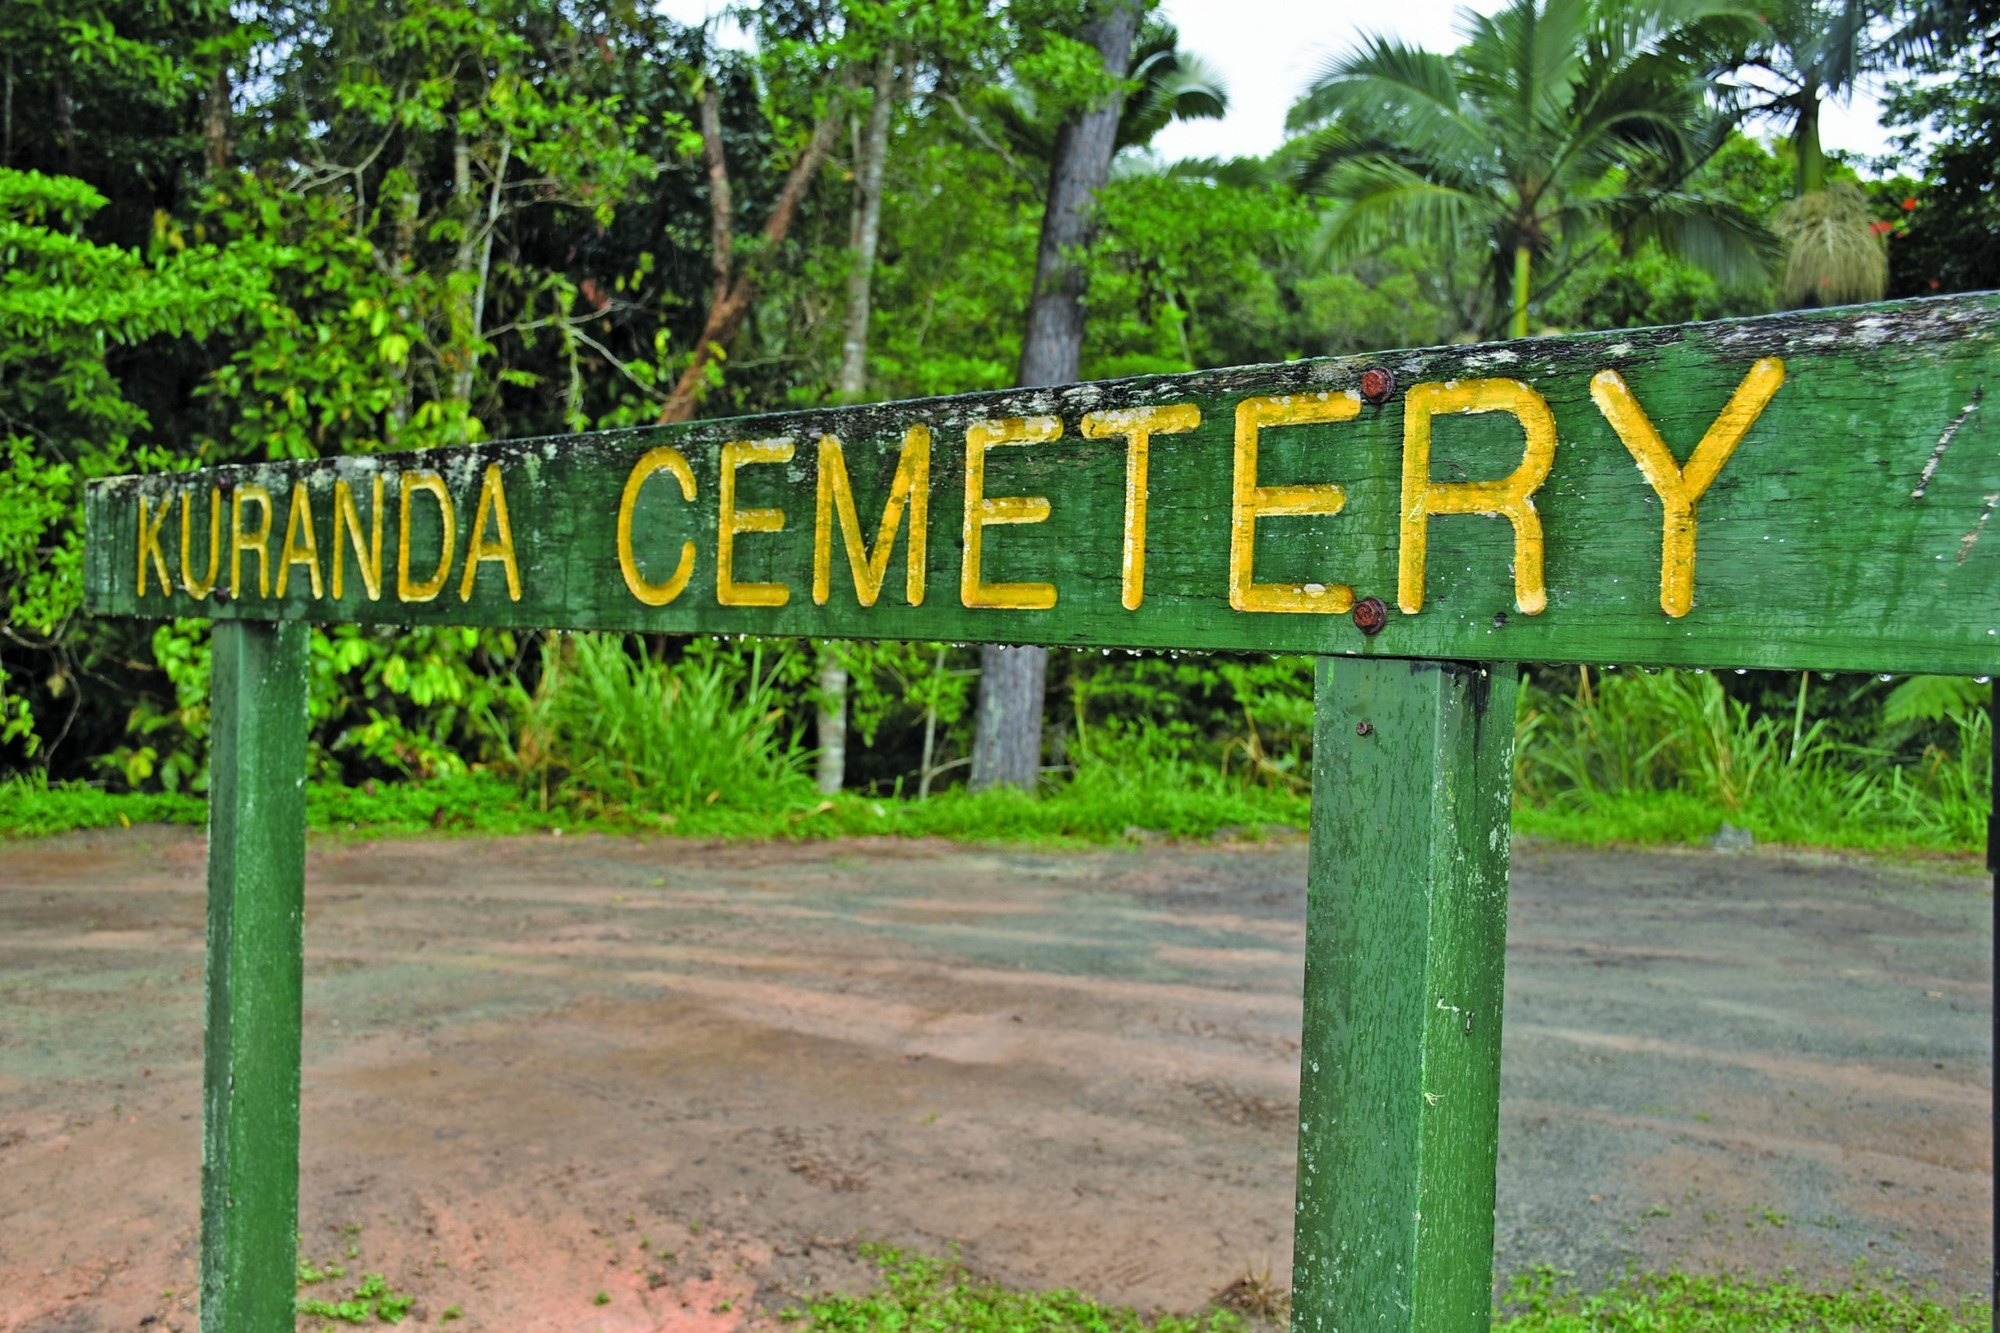 New site for Kuranda cemetery - feature photo